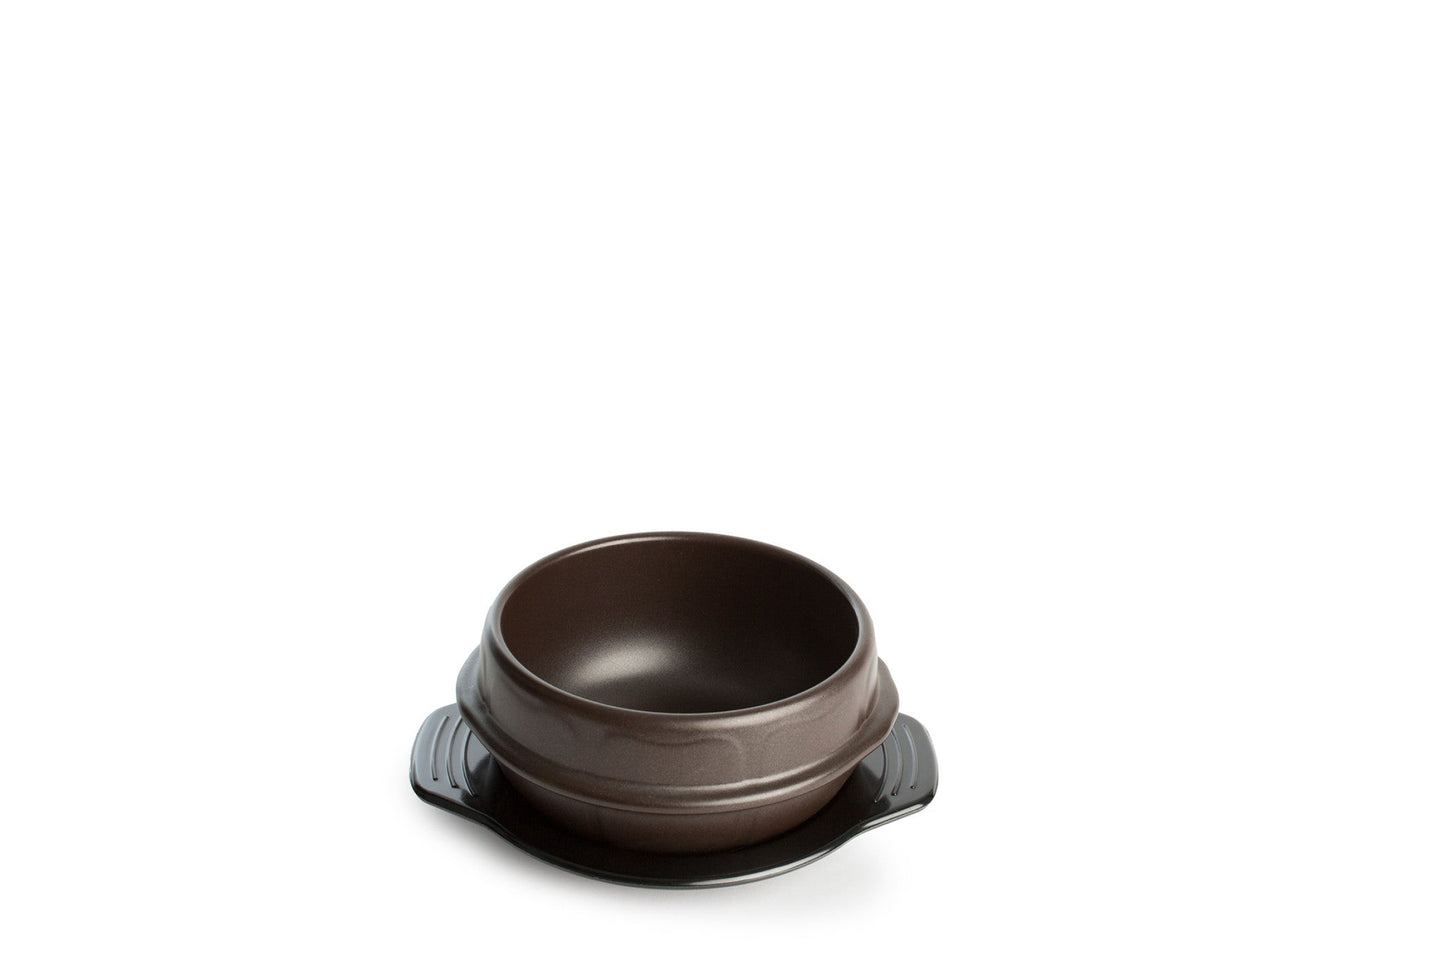 Premium Korean Stone Bowl Very Small, No Lid